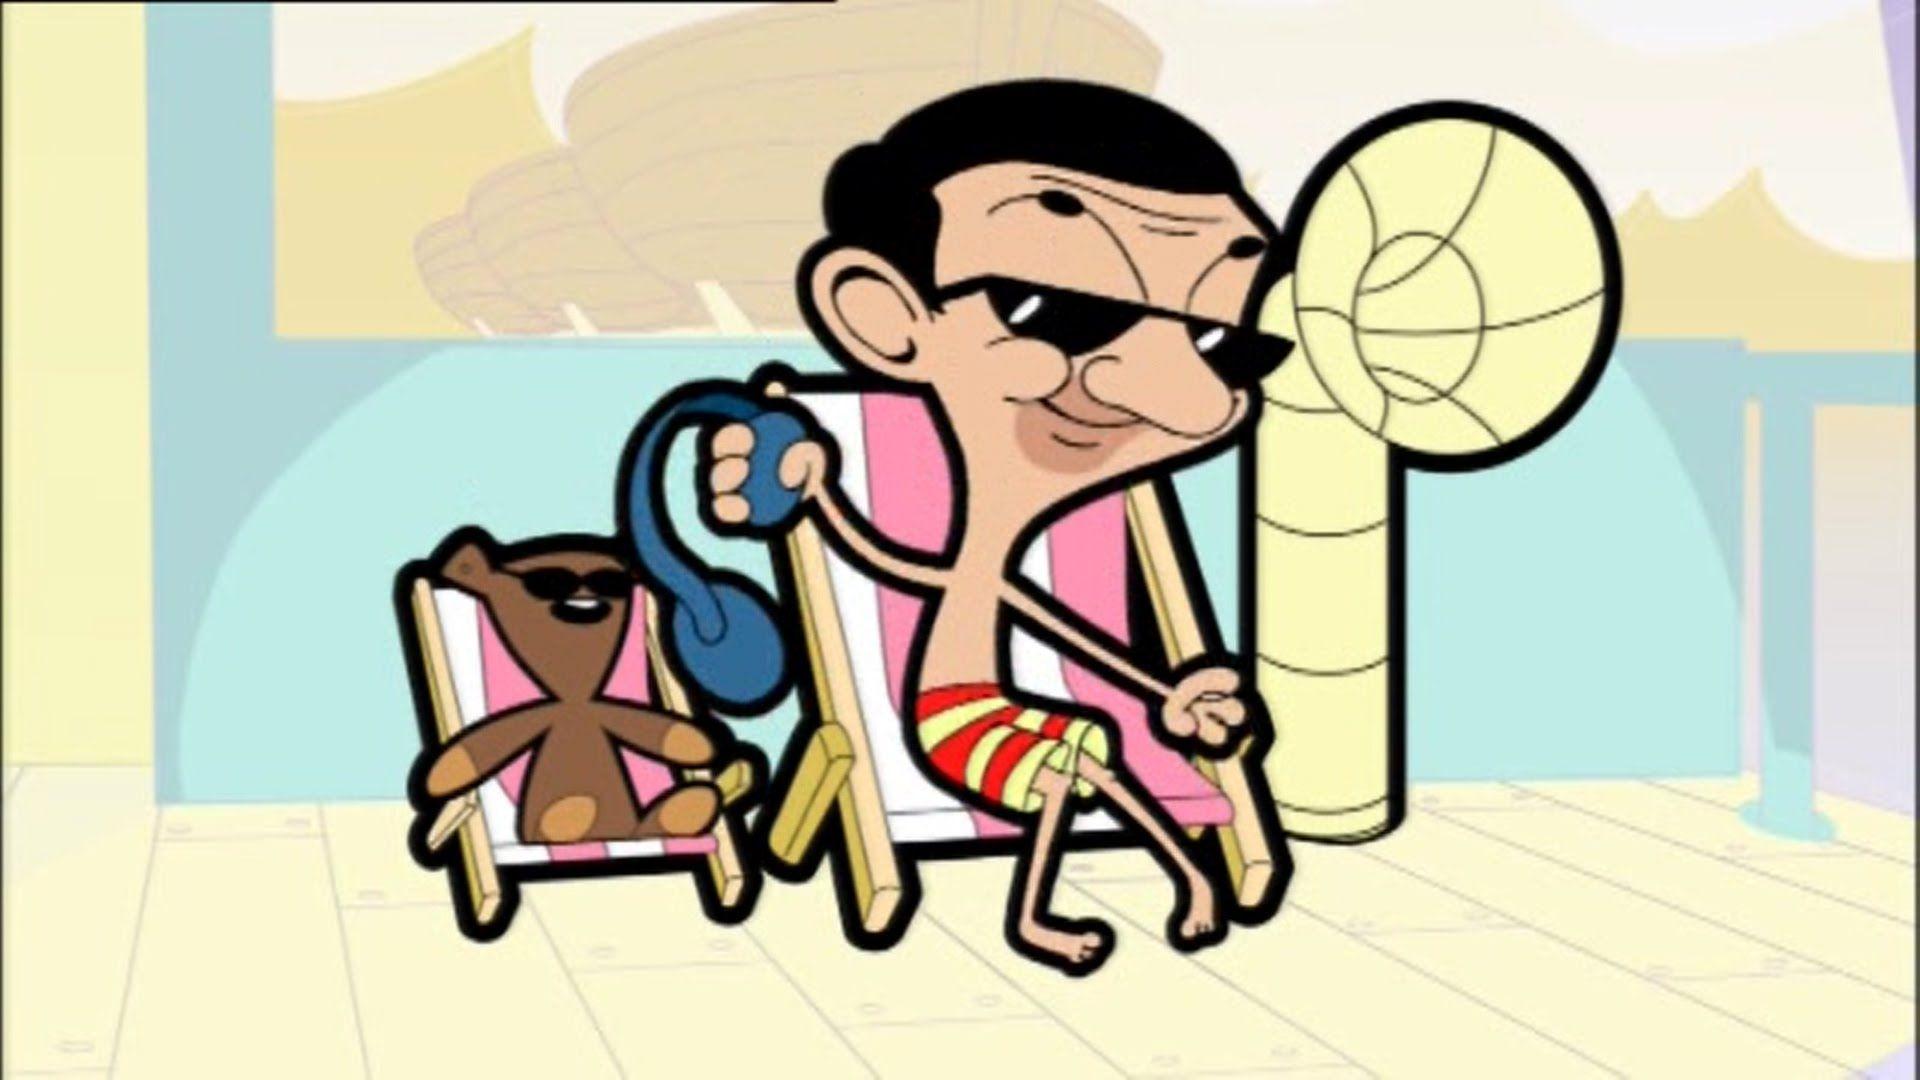 Mr. Bean Cartoon Wallpapers - Wallpaper Cave